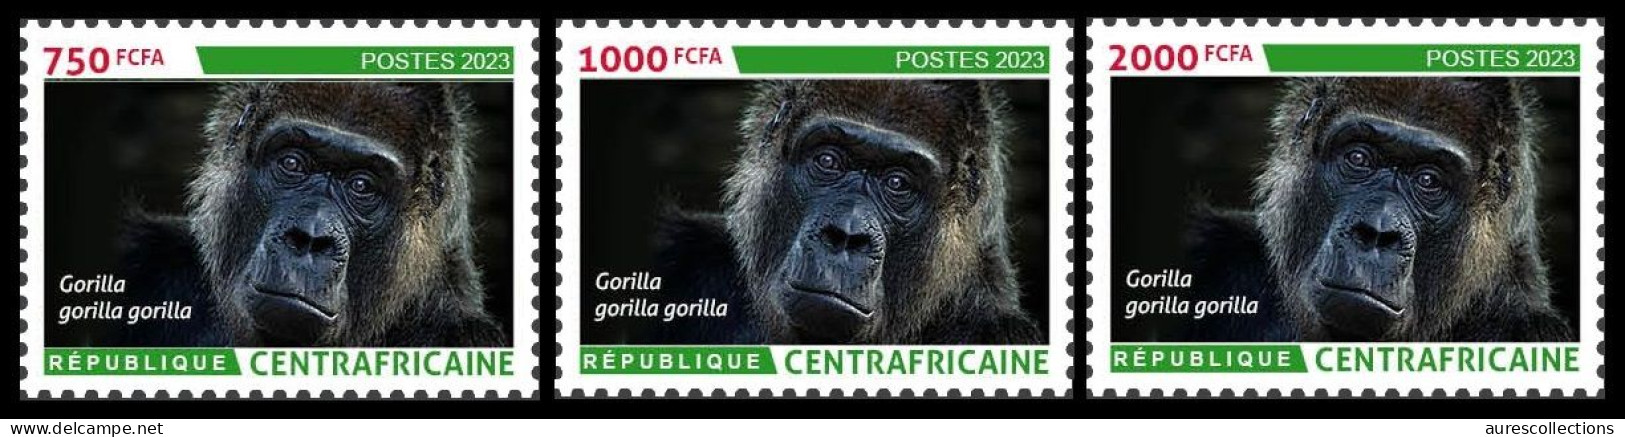 CENTRAL AFRICAN CENTRAFRICAINE 2023 SET 3V 750F 1000F 2000F- GORILLAS GORILLA GORILLE GORILLES APES - BIODIVERSITY - MNH - Gorillas